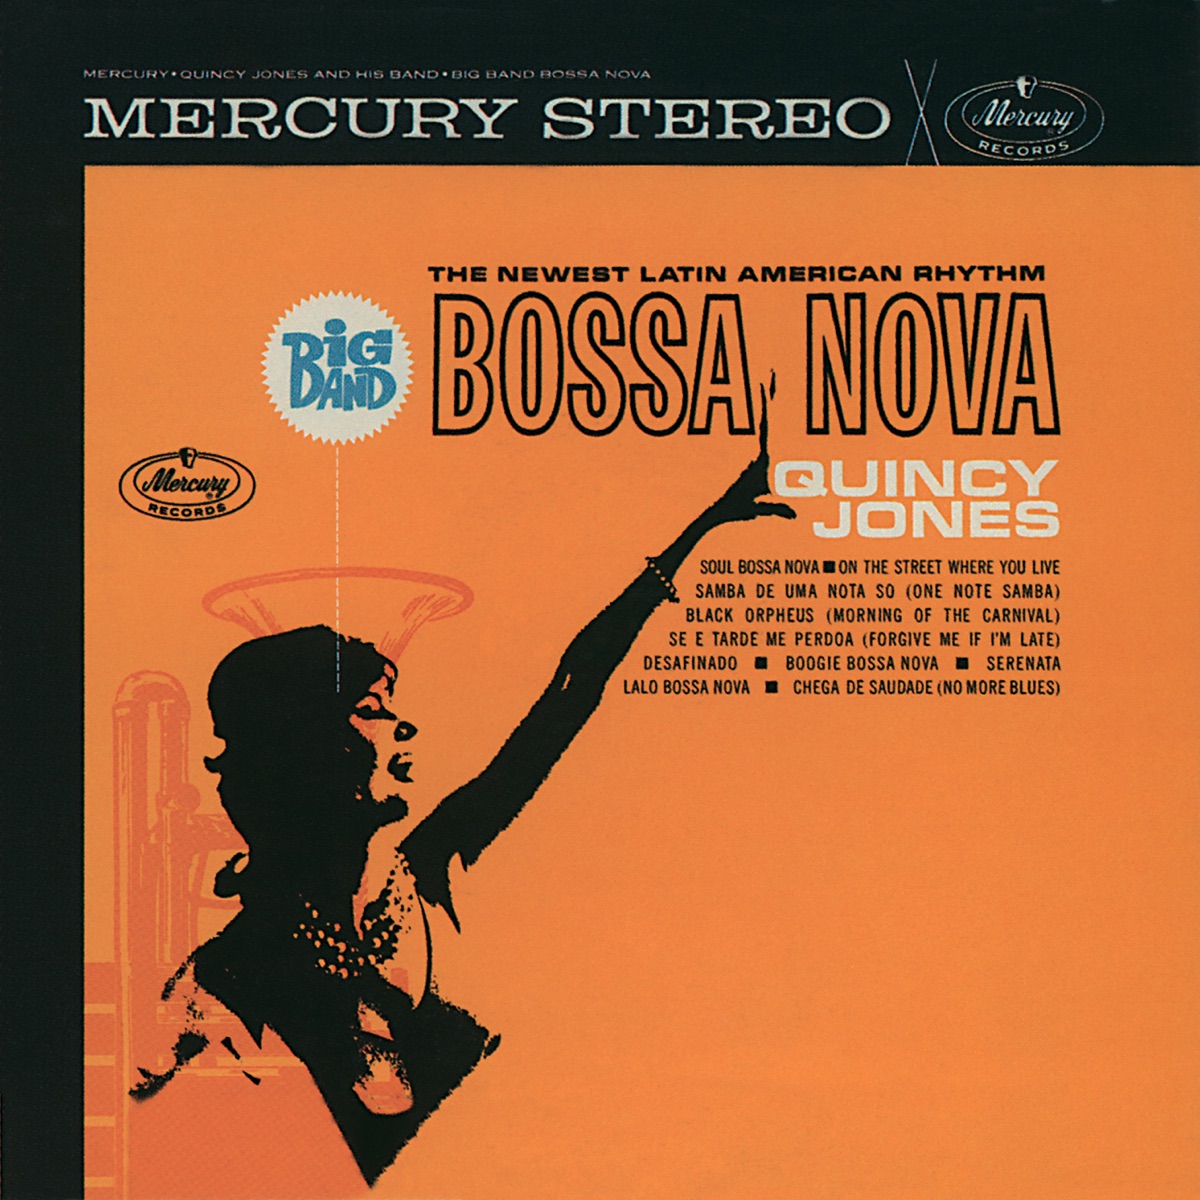 Big Band Bossa Nova - Album by Quincy Jones - Apple Music